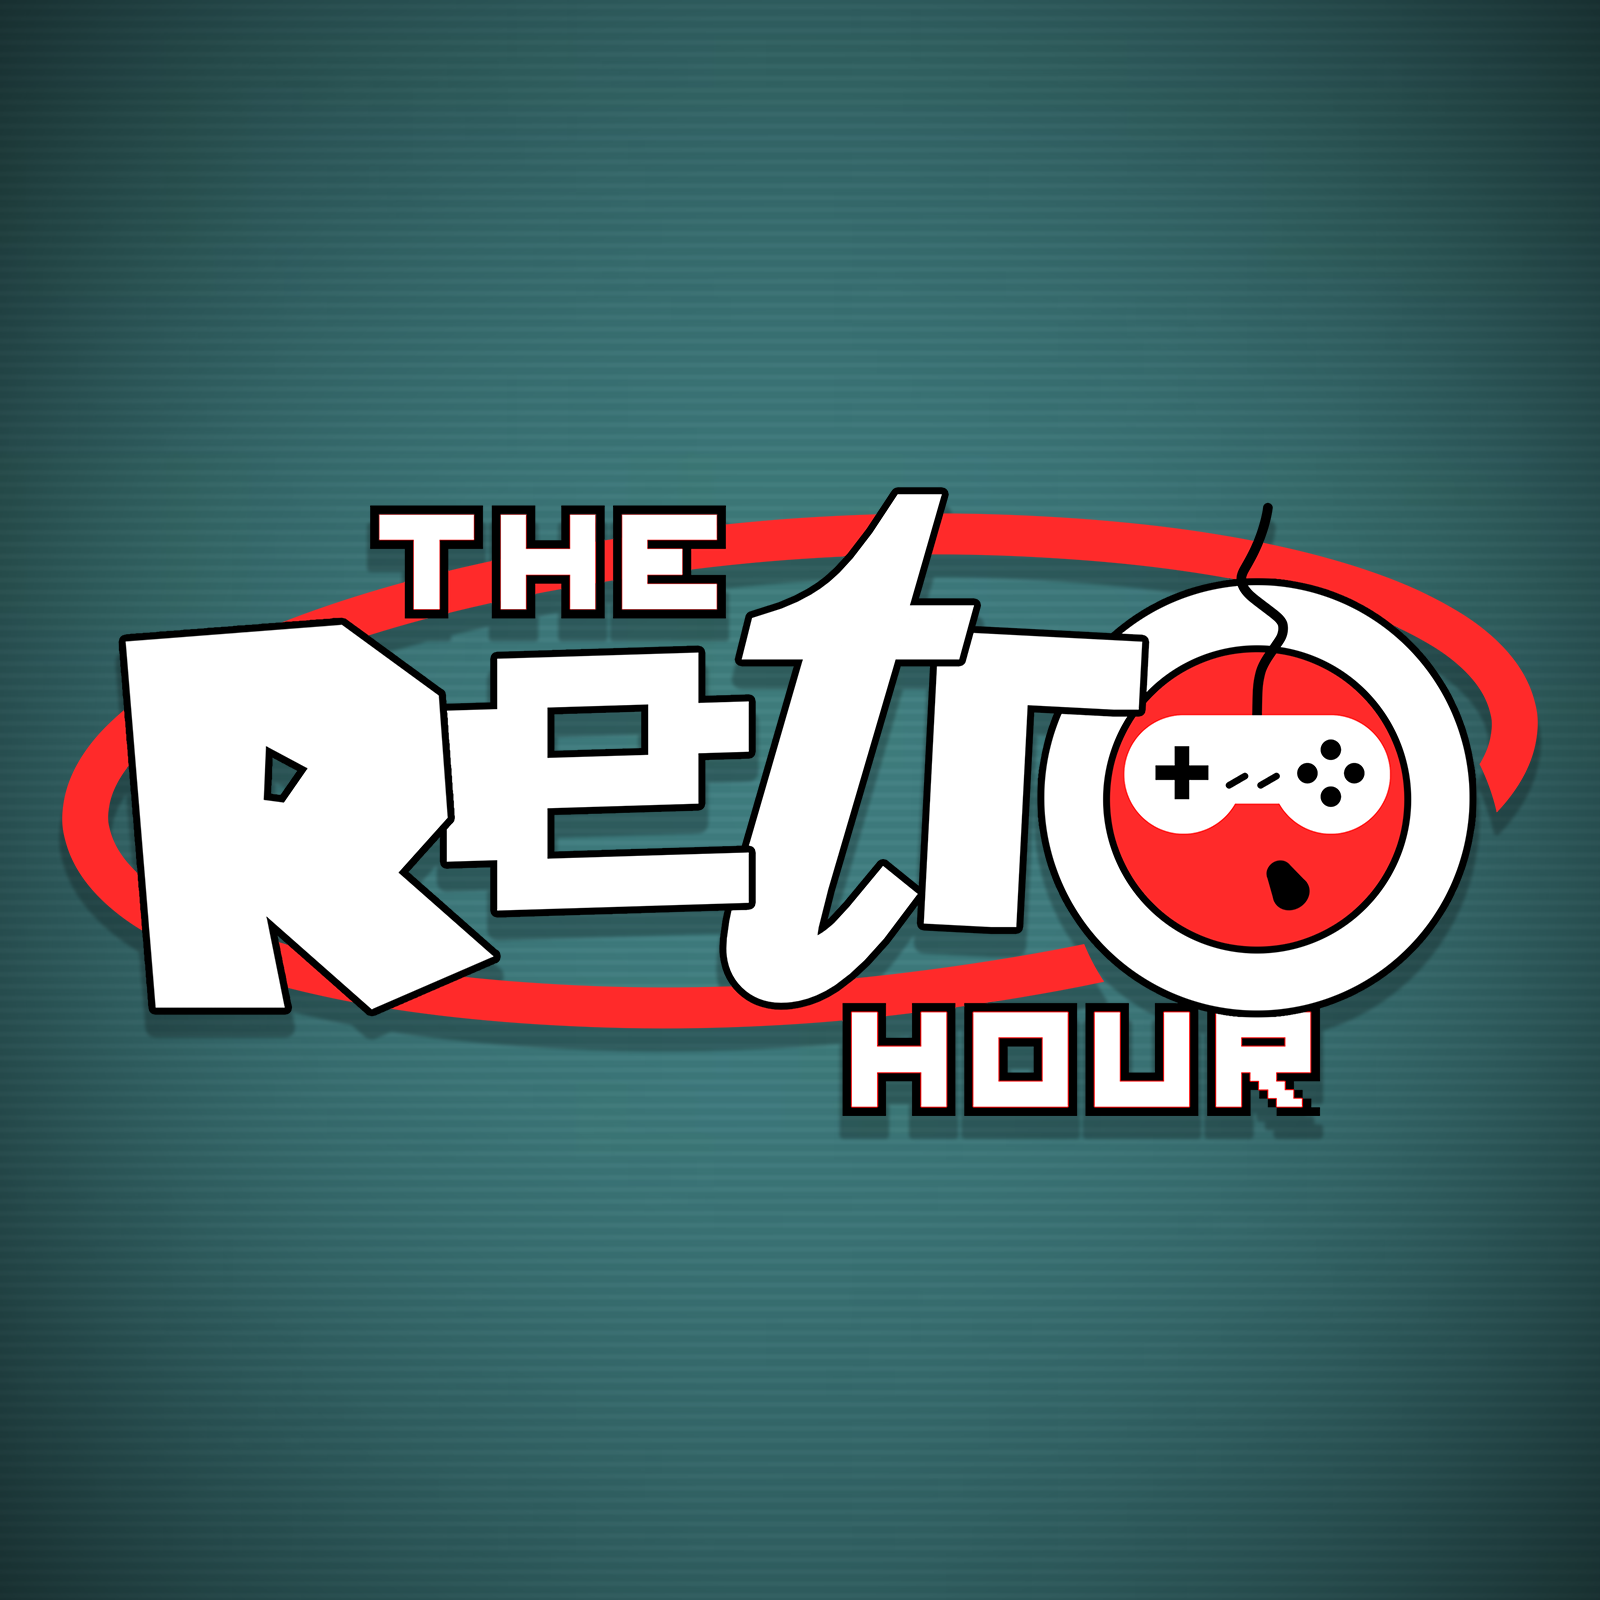 243: Team 17 to Hollywood with Cris Blyth - The Retro Hour EP243